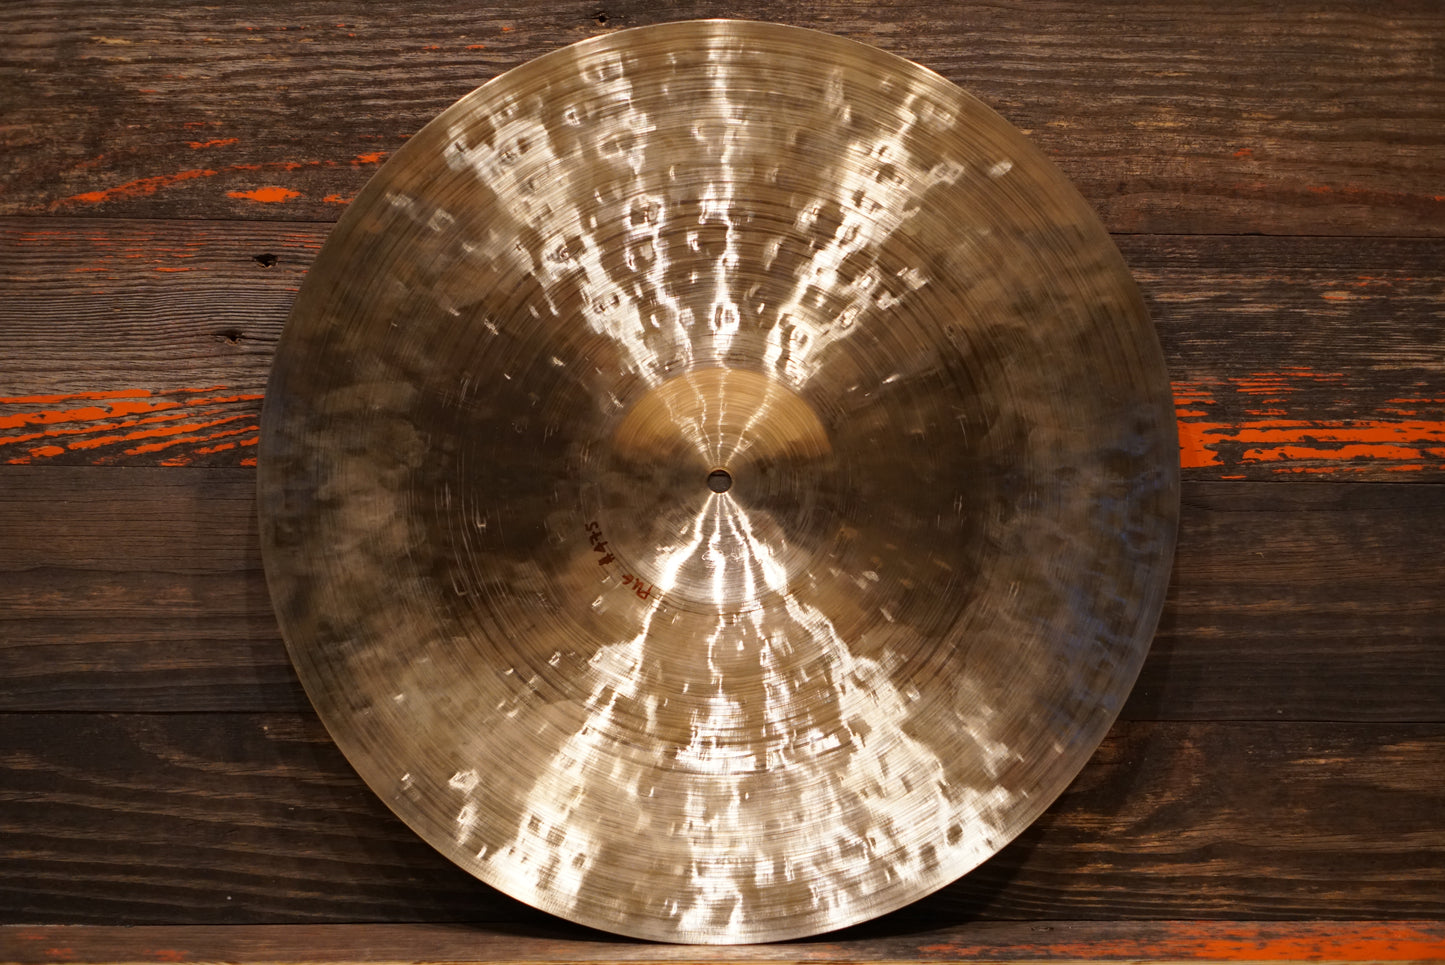 Pug 19" Dark Traditional Ride Cymbal - 1645g